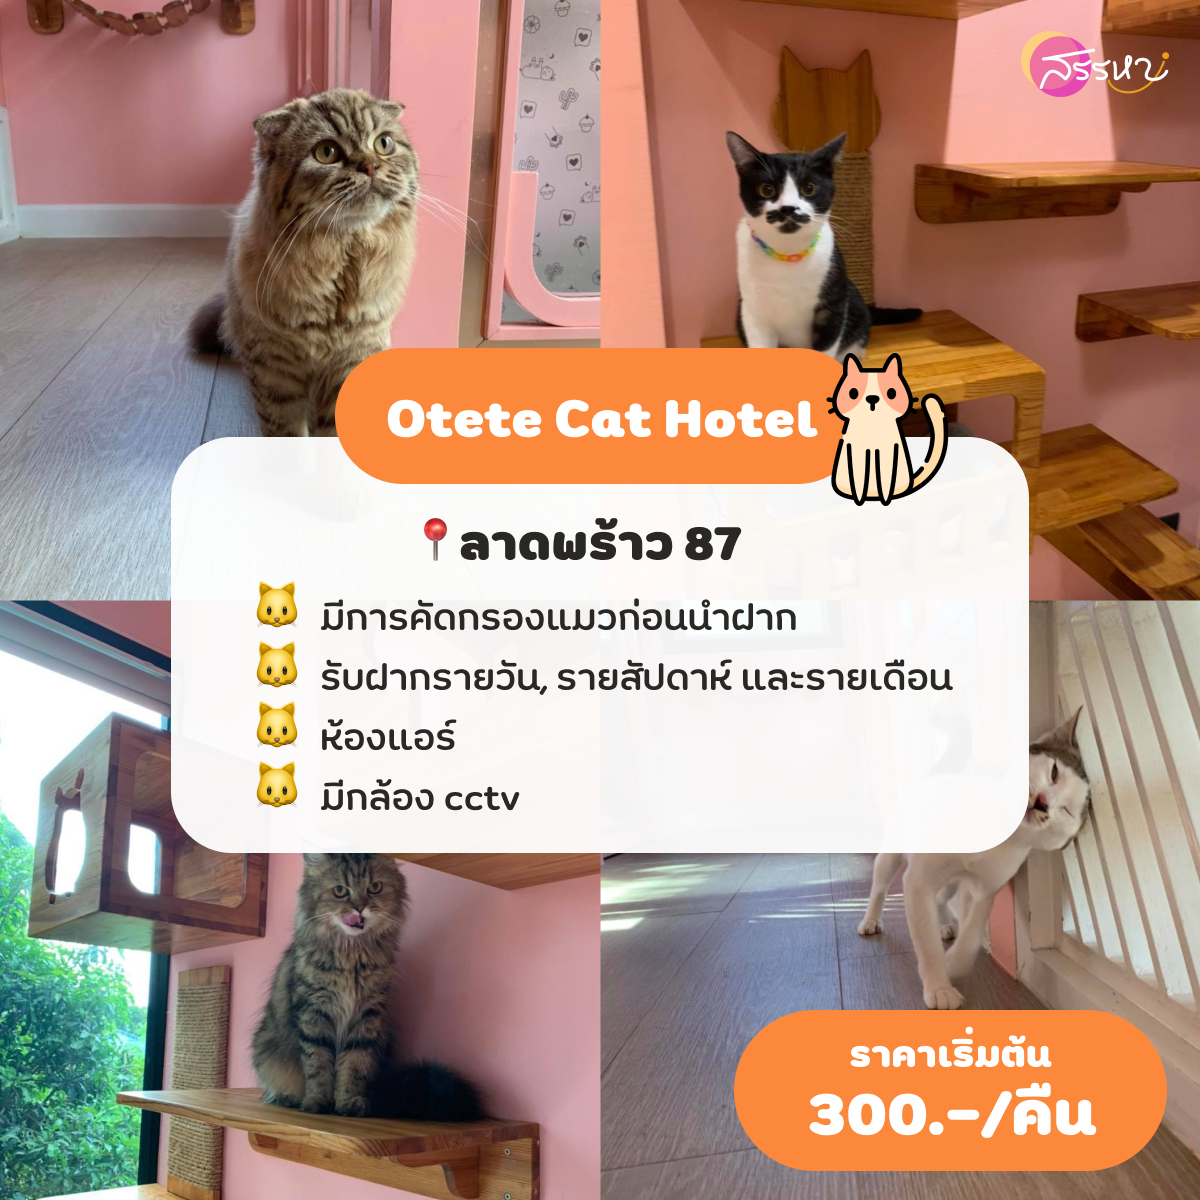 Otete Cat Hotel